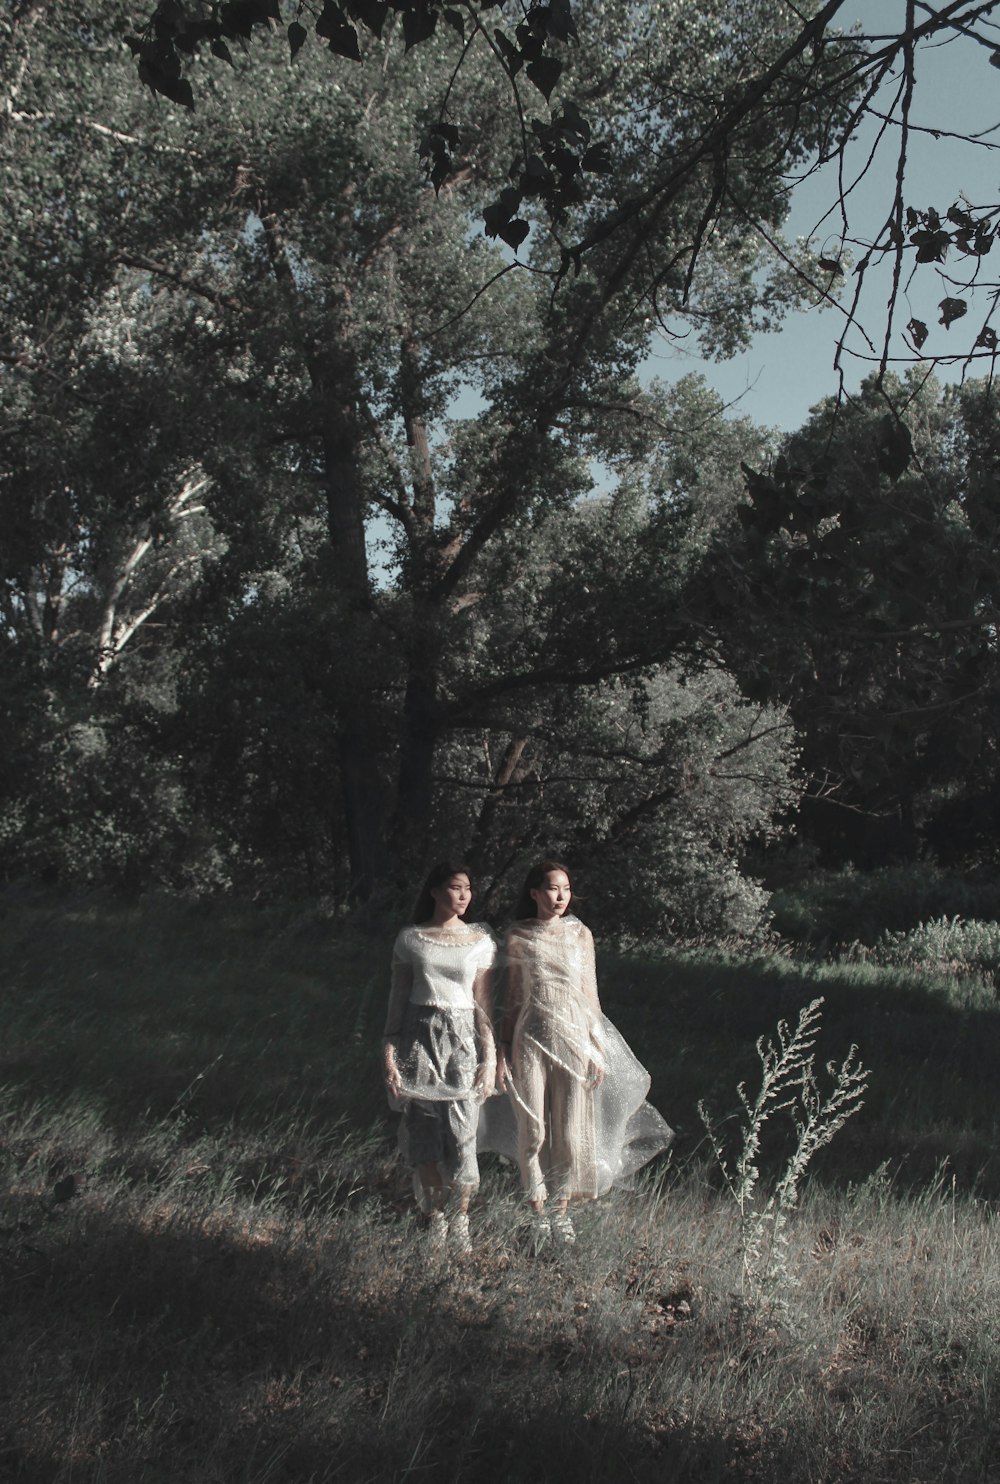 two women wearing white dress